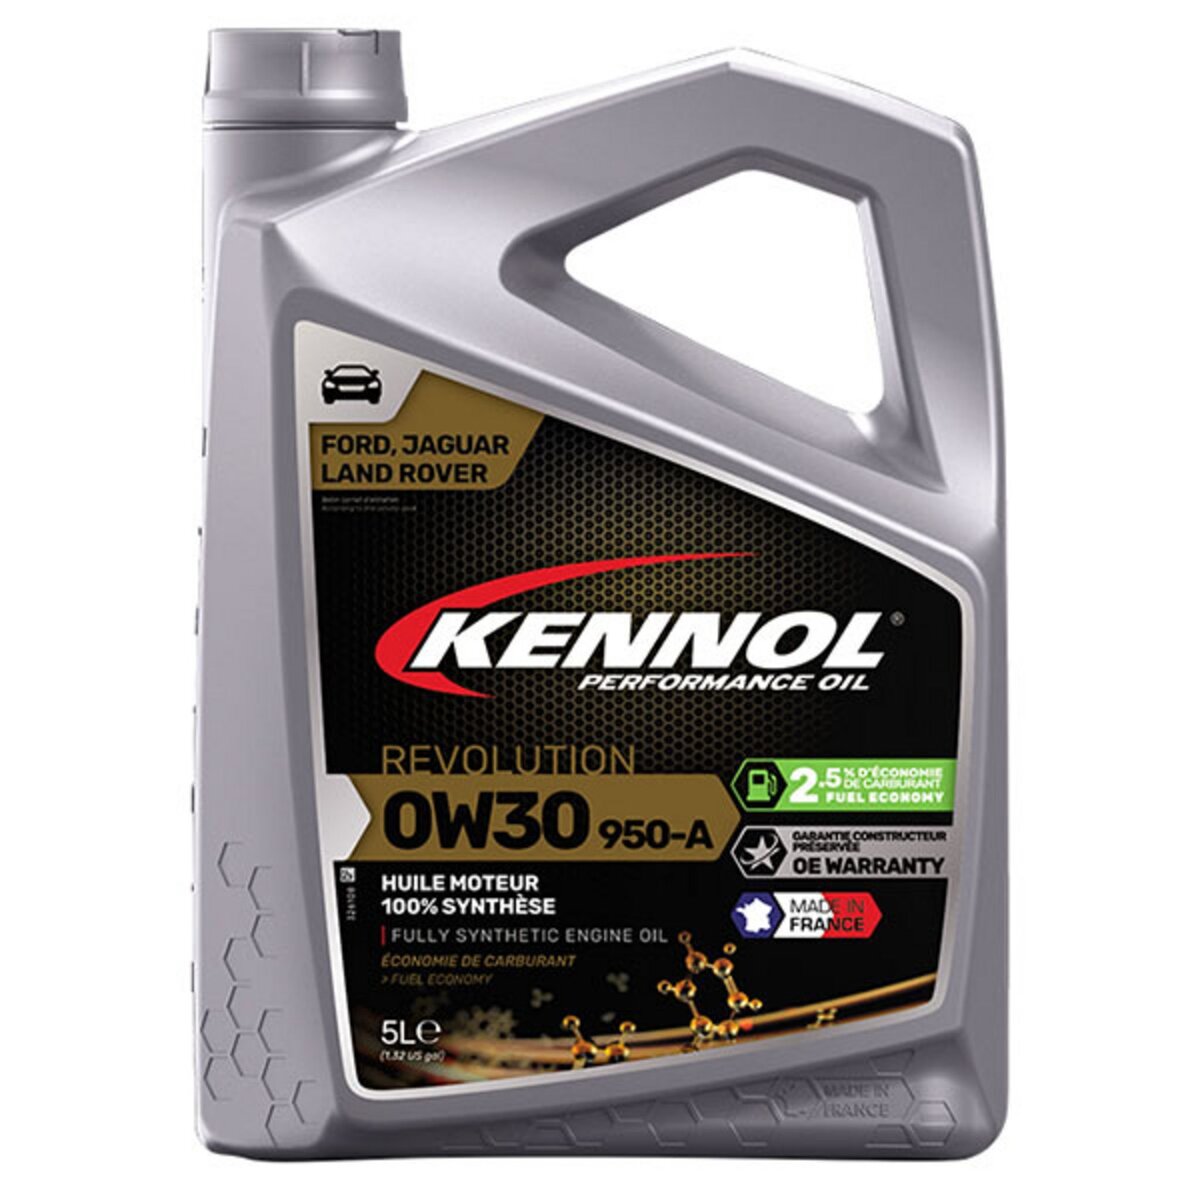 Huile Moteur Kennol Kennol Revolution 950-A 0W30 5 L pas cher 